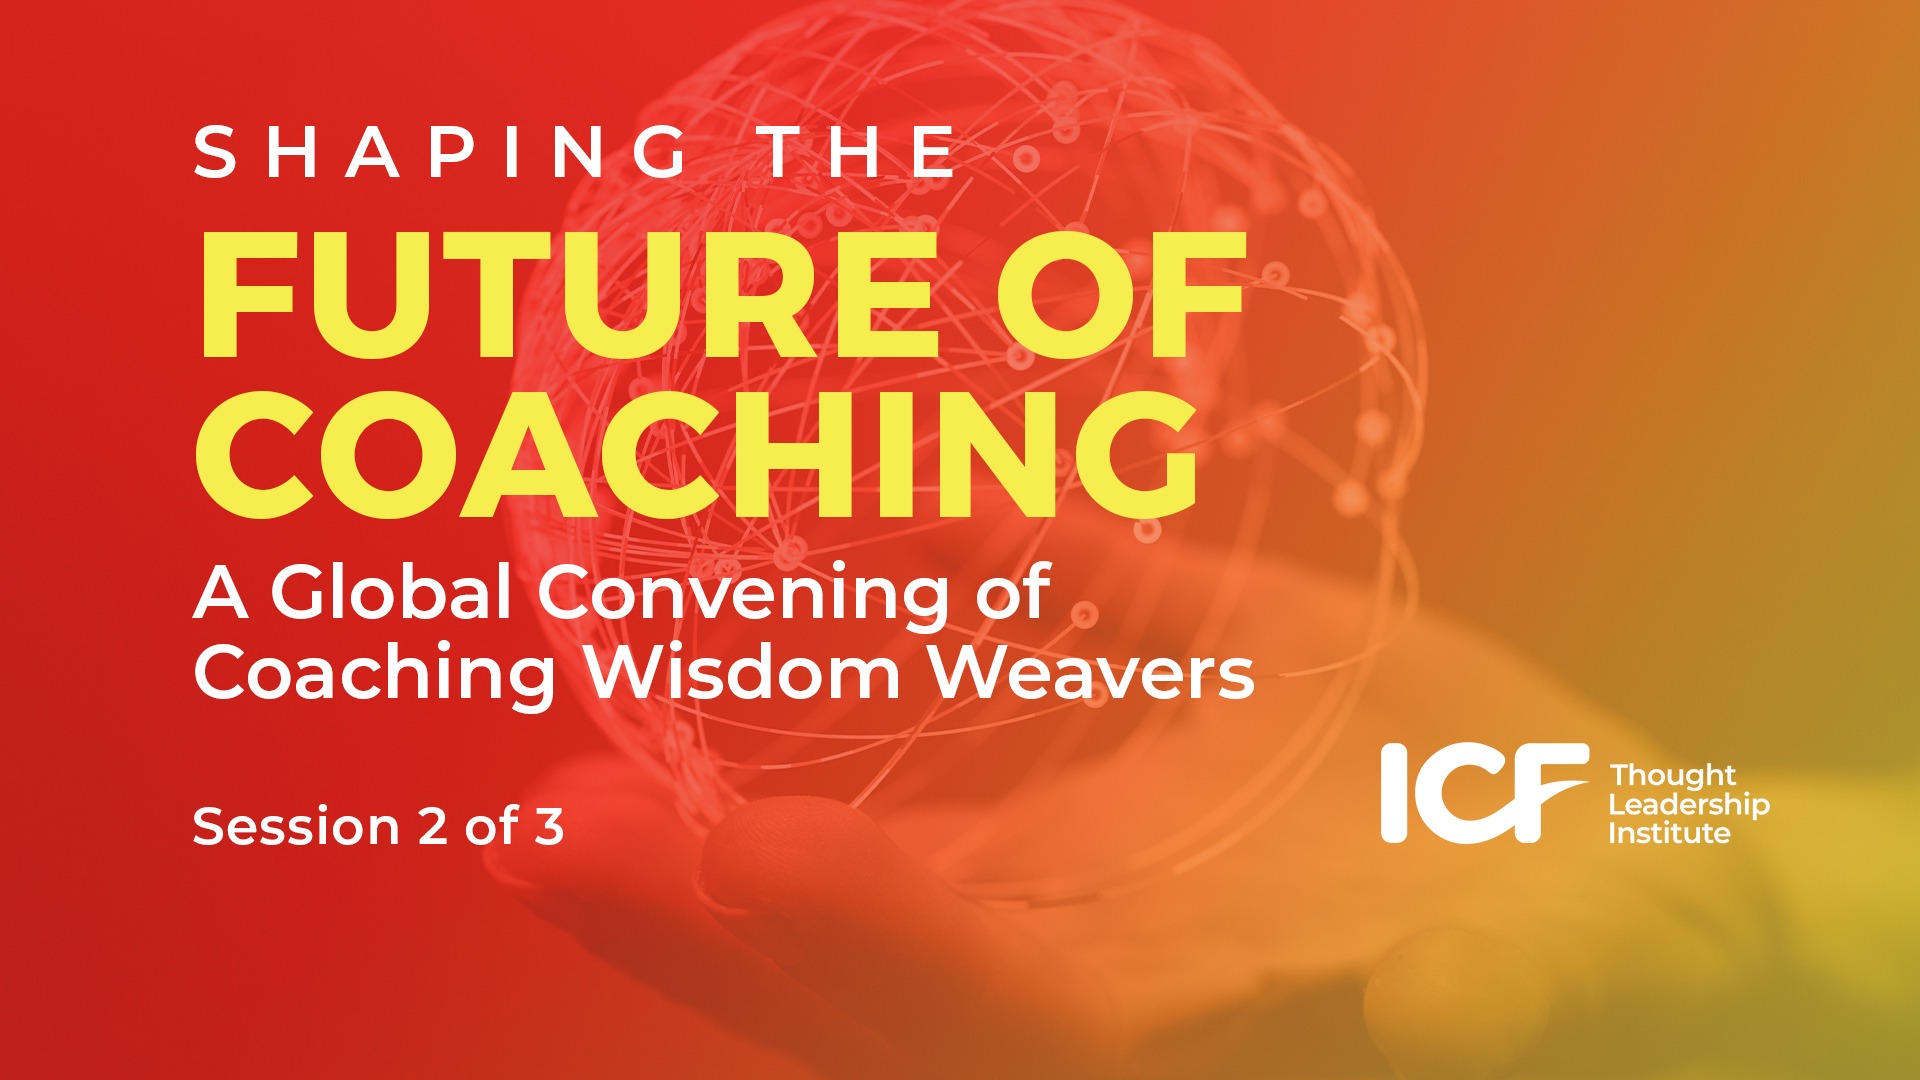 Shaping the Future of Coaching: Internal Mechanisms